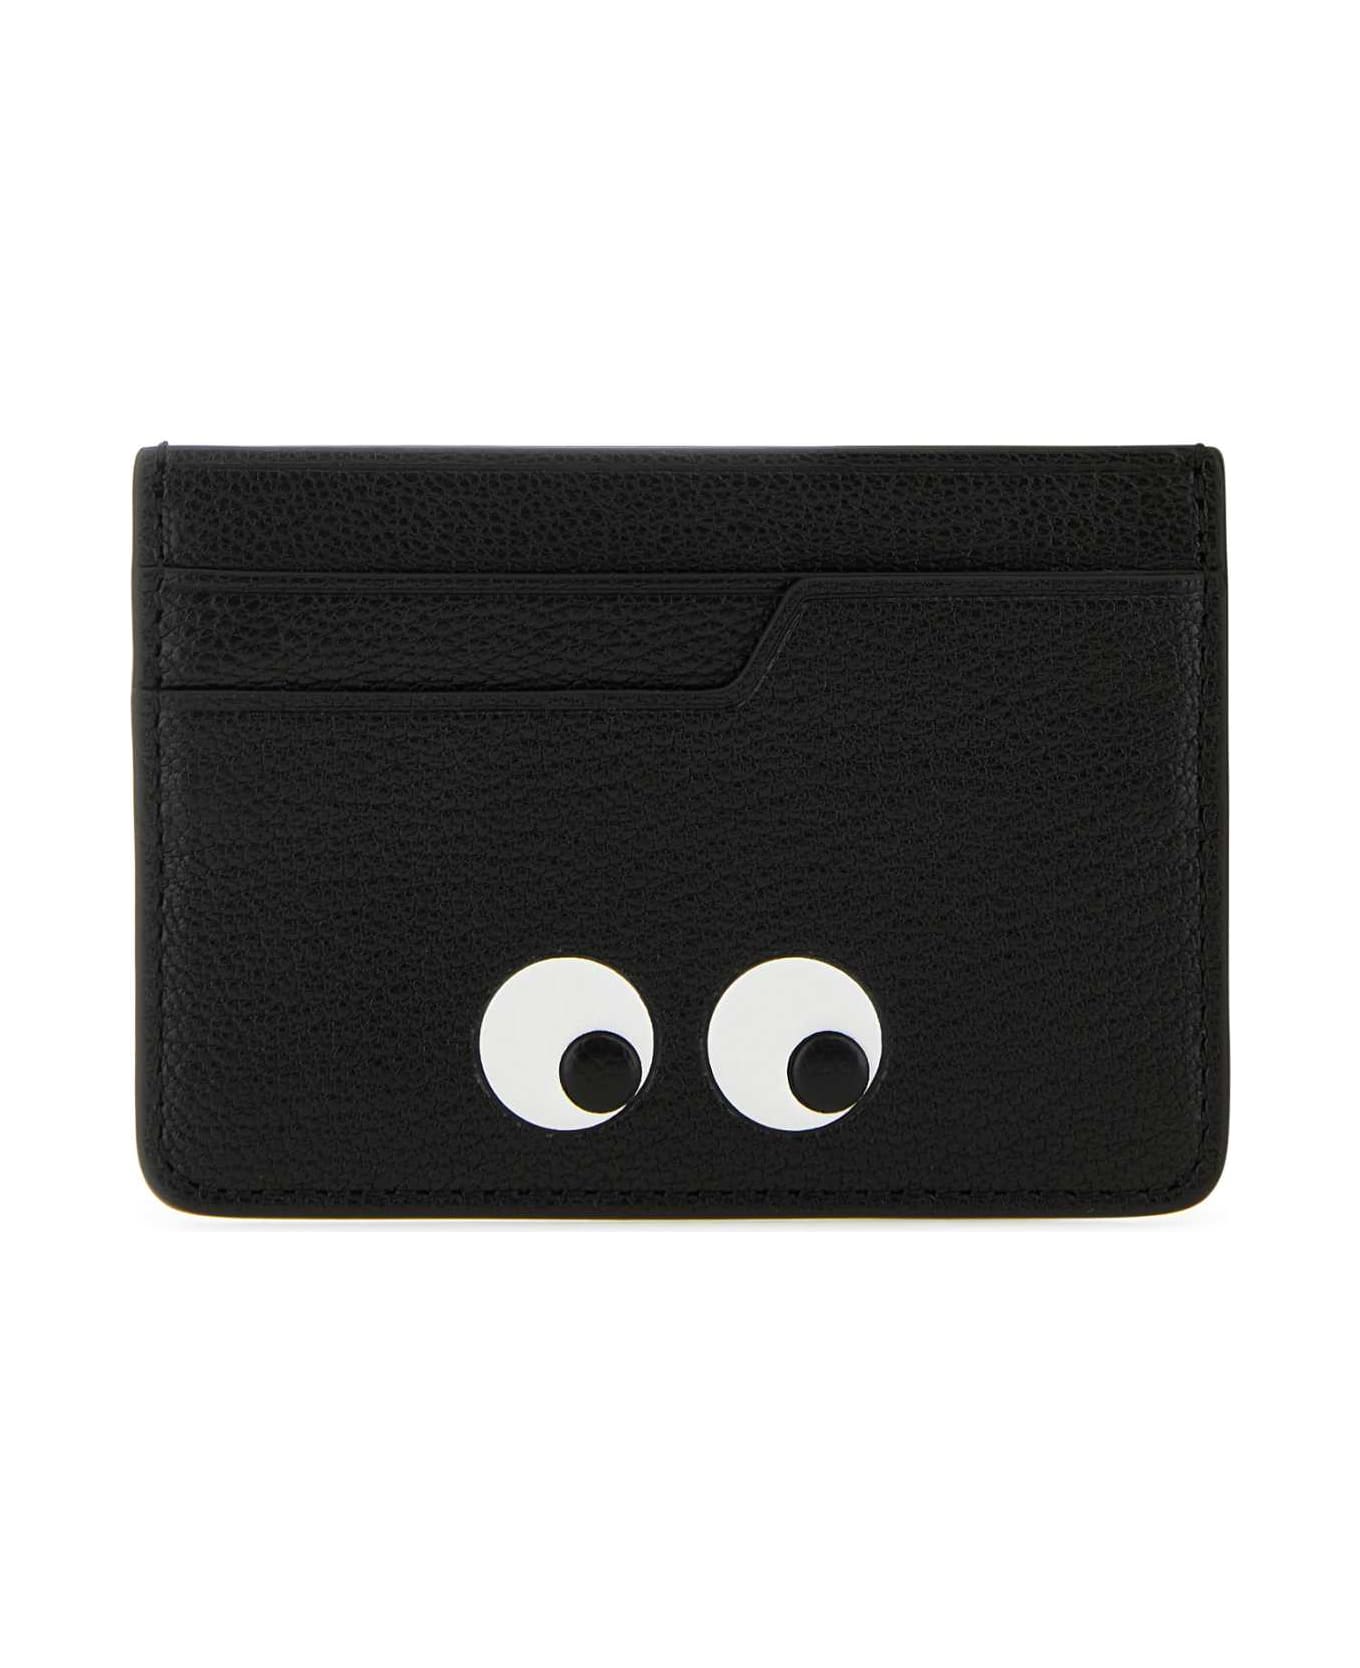 Anya Hindmarch Black Leather Card Holder - BLACK 財布